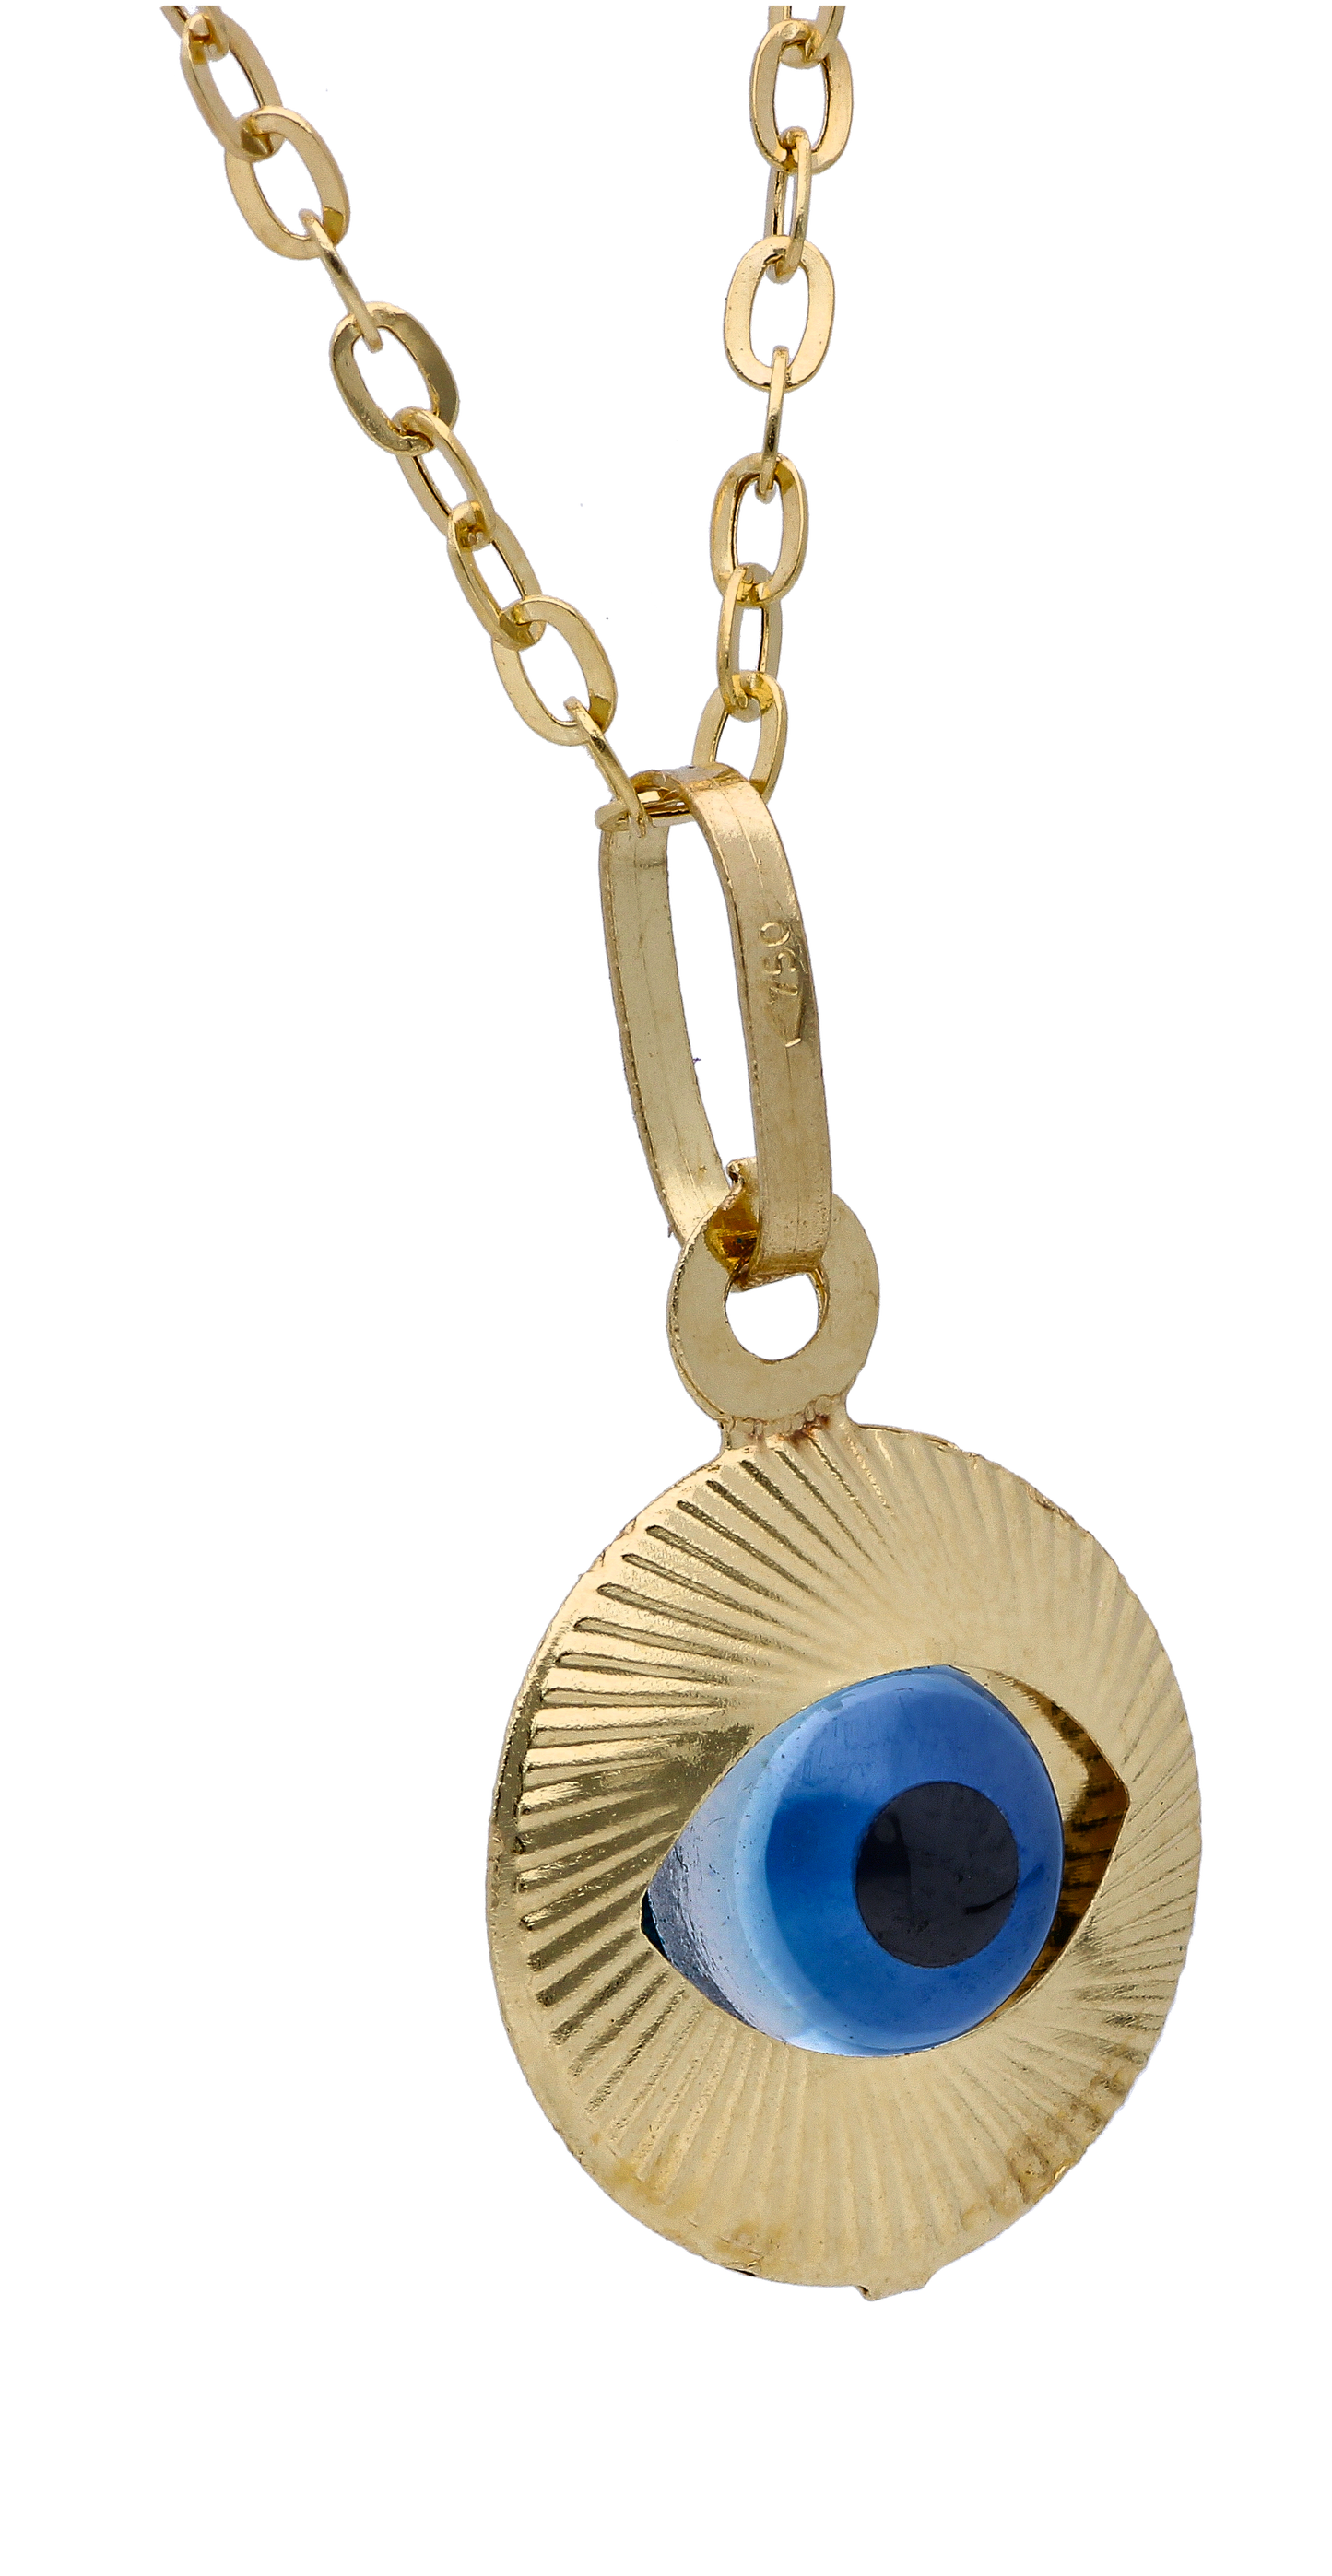 Gold Necklace (Chain with Evil Eye Pendant) 18KT - FKJNKL18KU6289